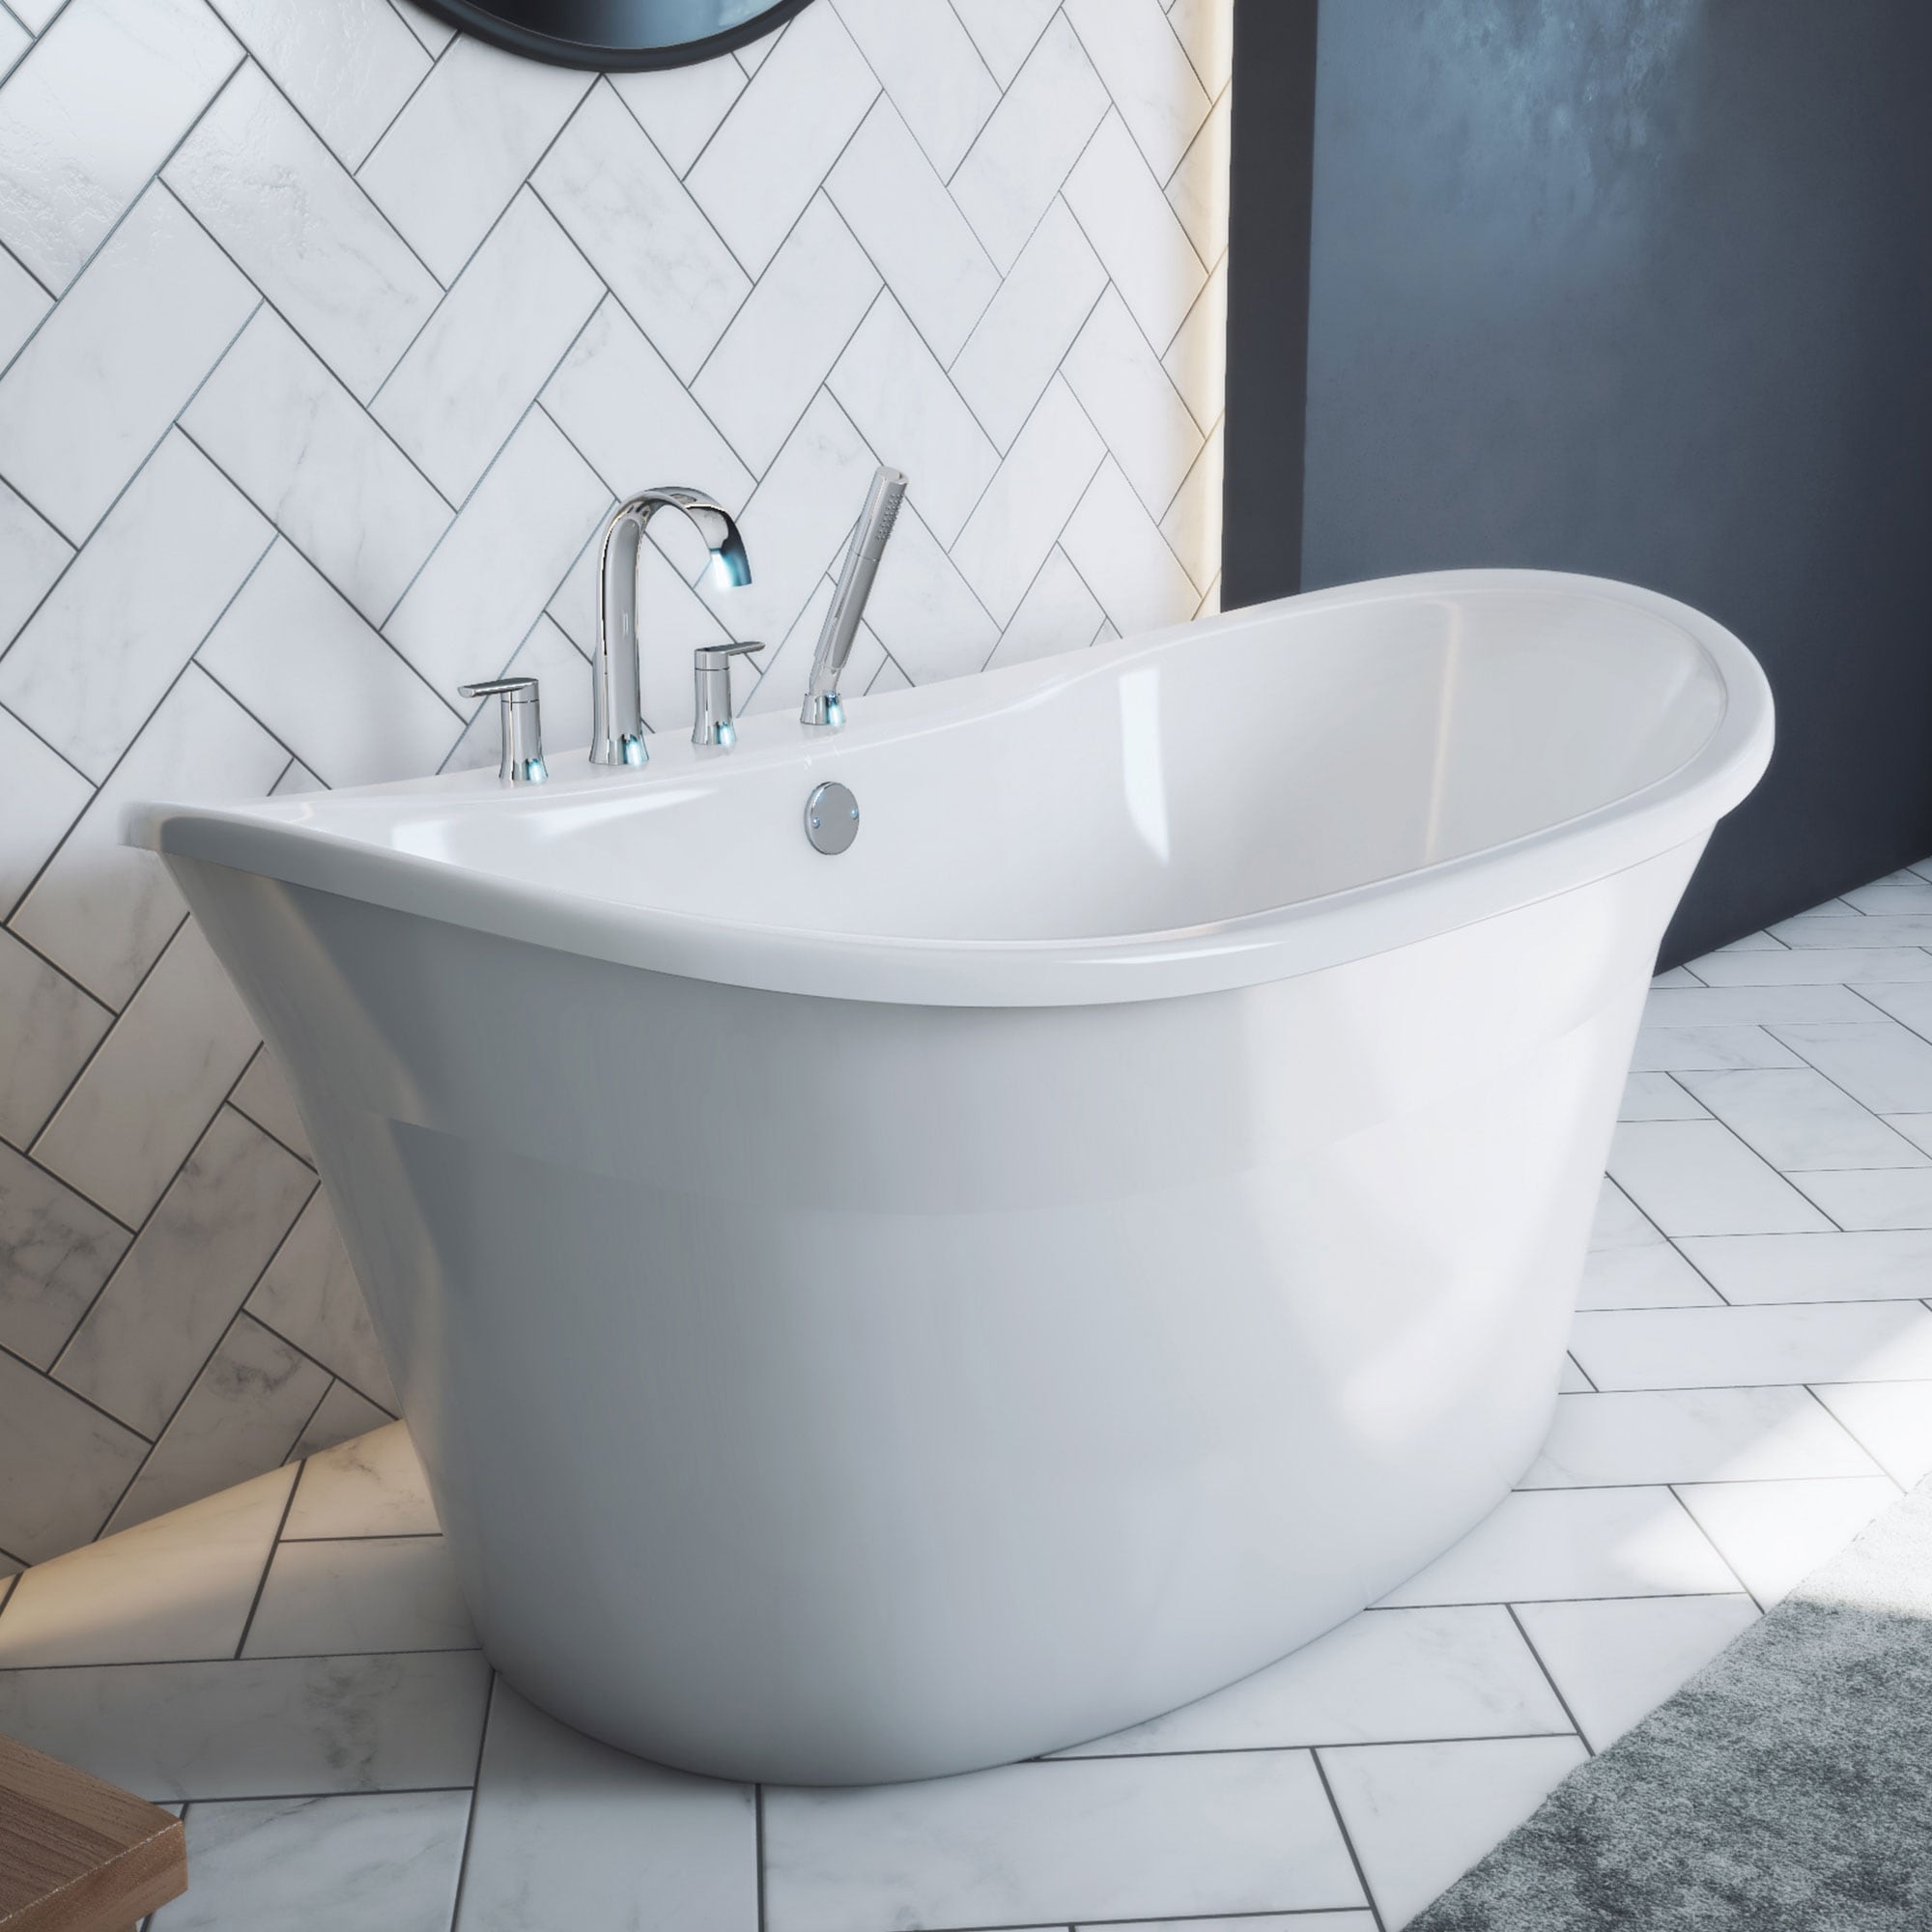 DreamLine Montego 32-in W x 60-in L Acrylic Oval Center Drain Freestanding Soaking Bathtub Bathtubs department at